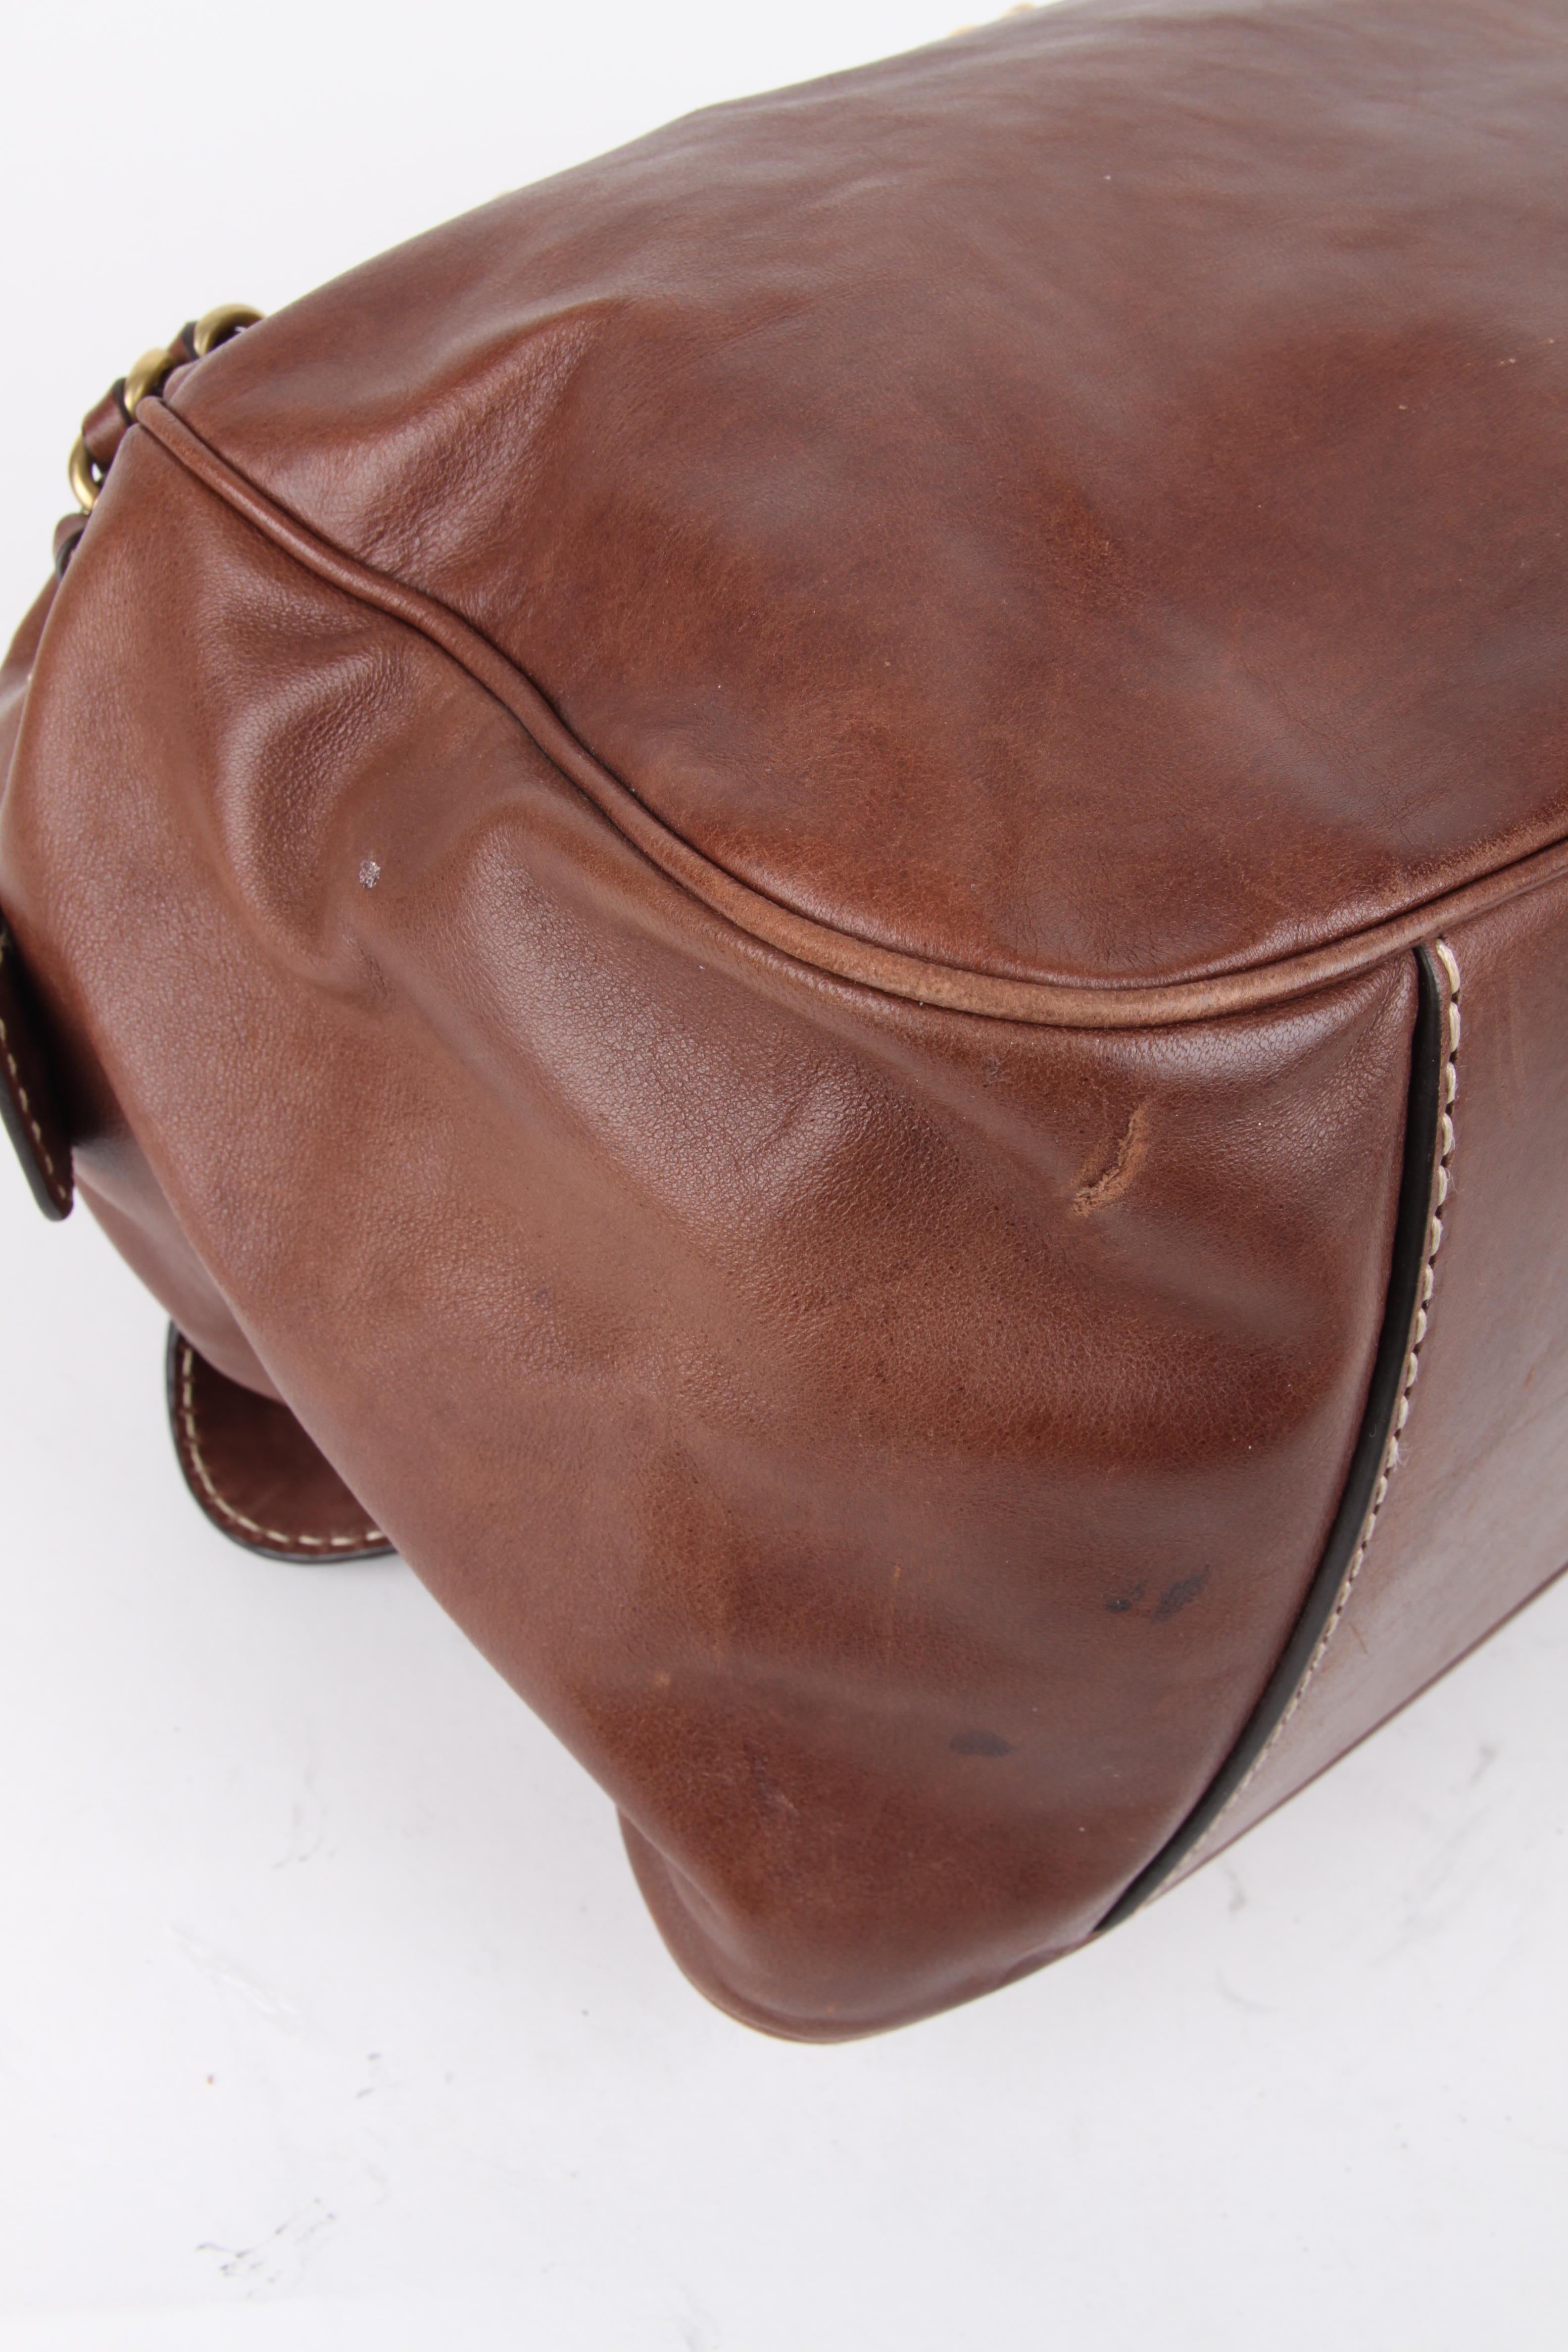 Dolce and Gabbana Brown Leather Tassle Chain Handbag For Sale 5